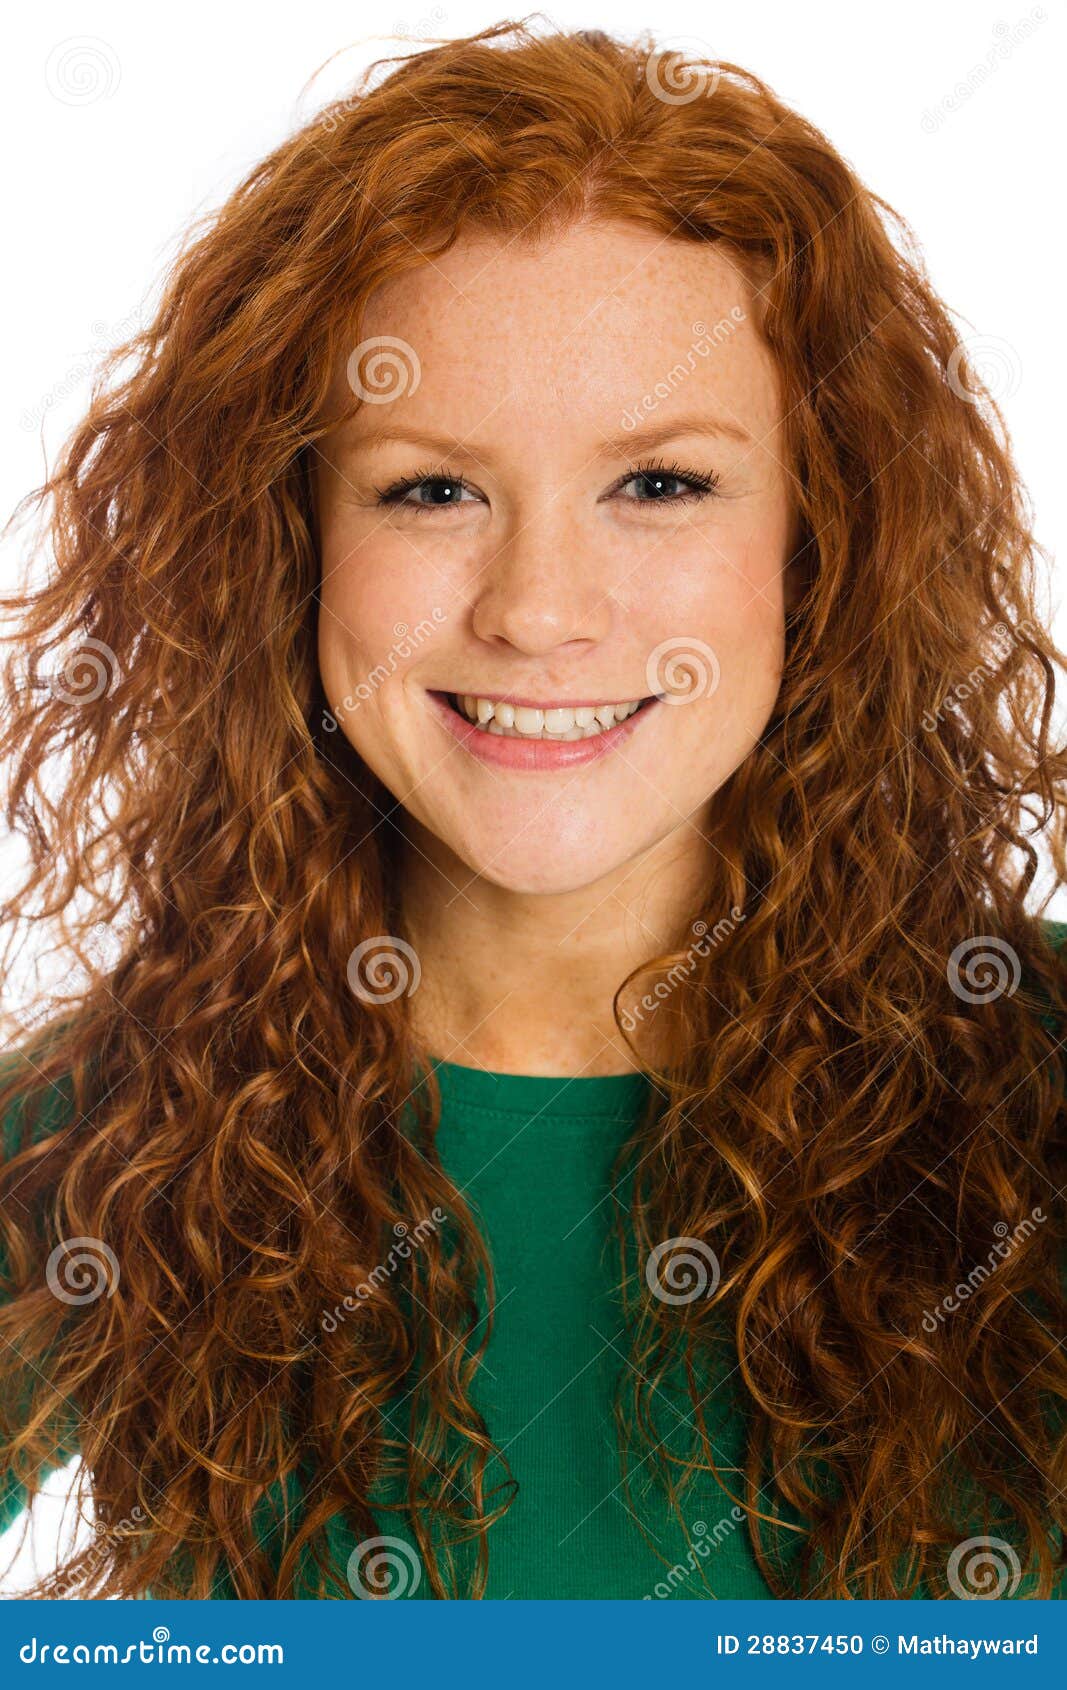 Redhead girlnextdoor